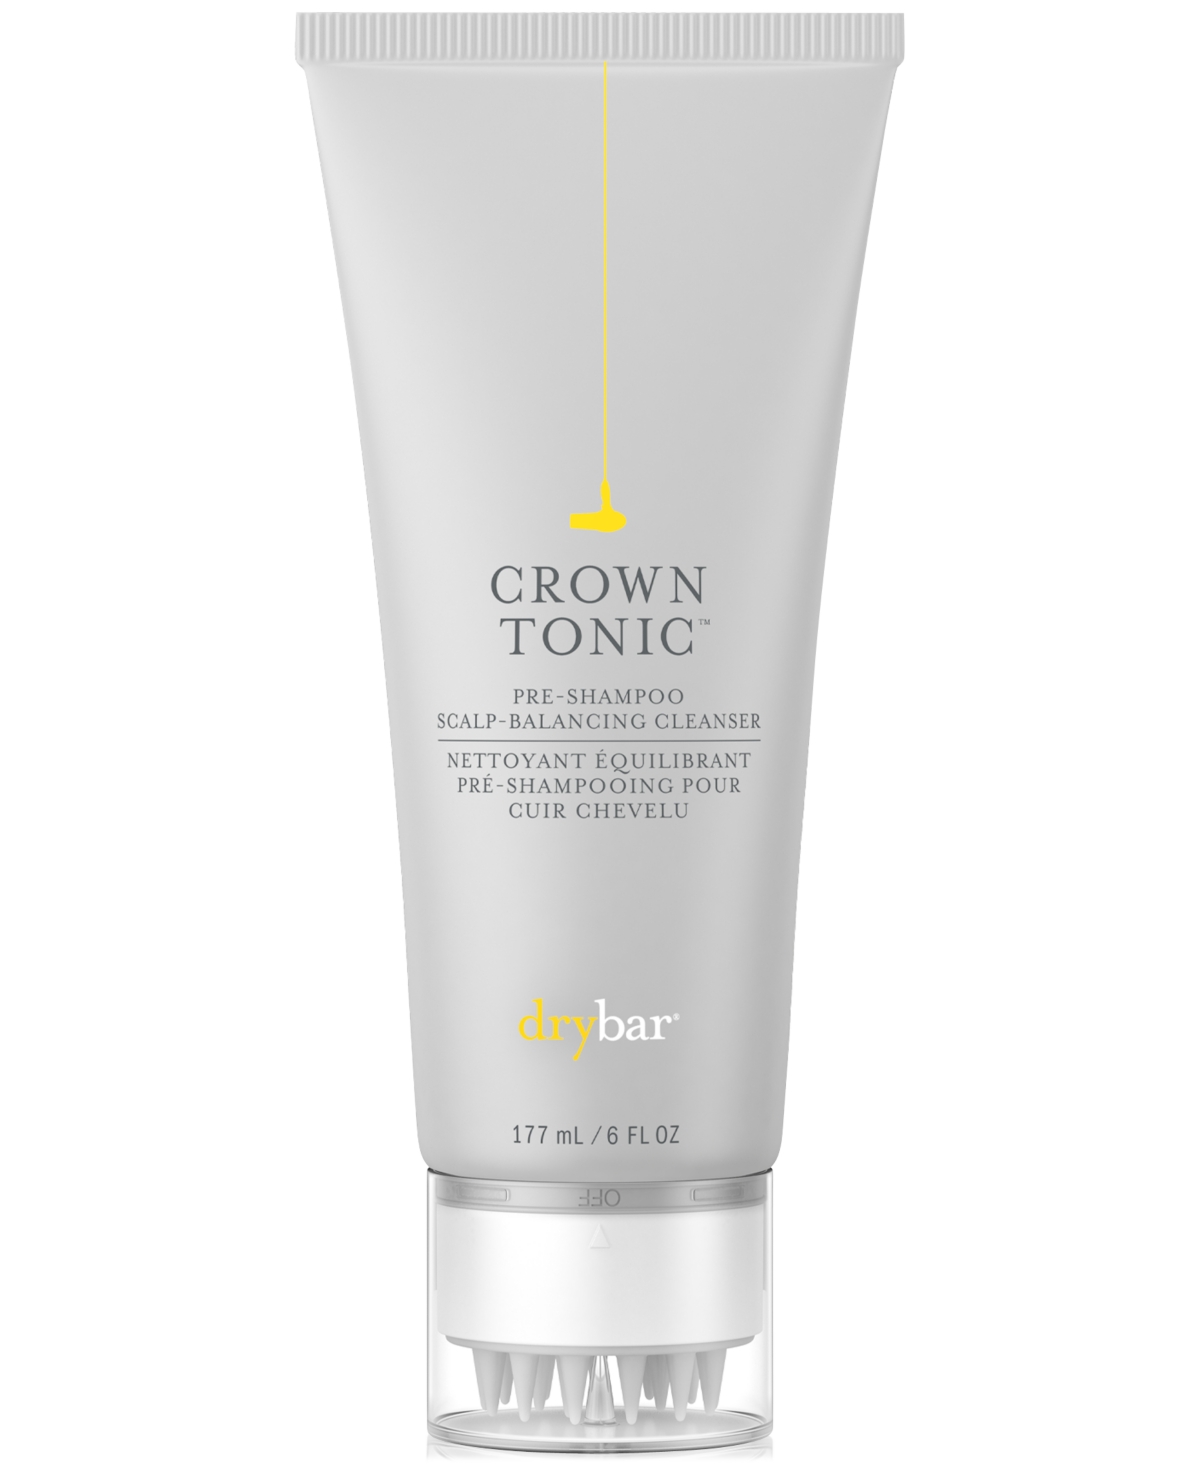 Drybar Crown Tonic Pre-shampoo Scalp-balancing Cleanser